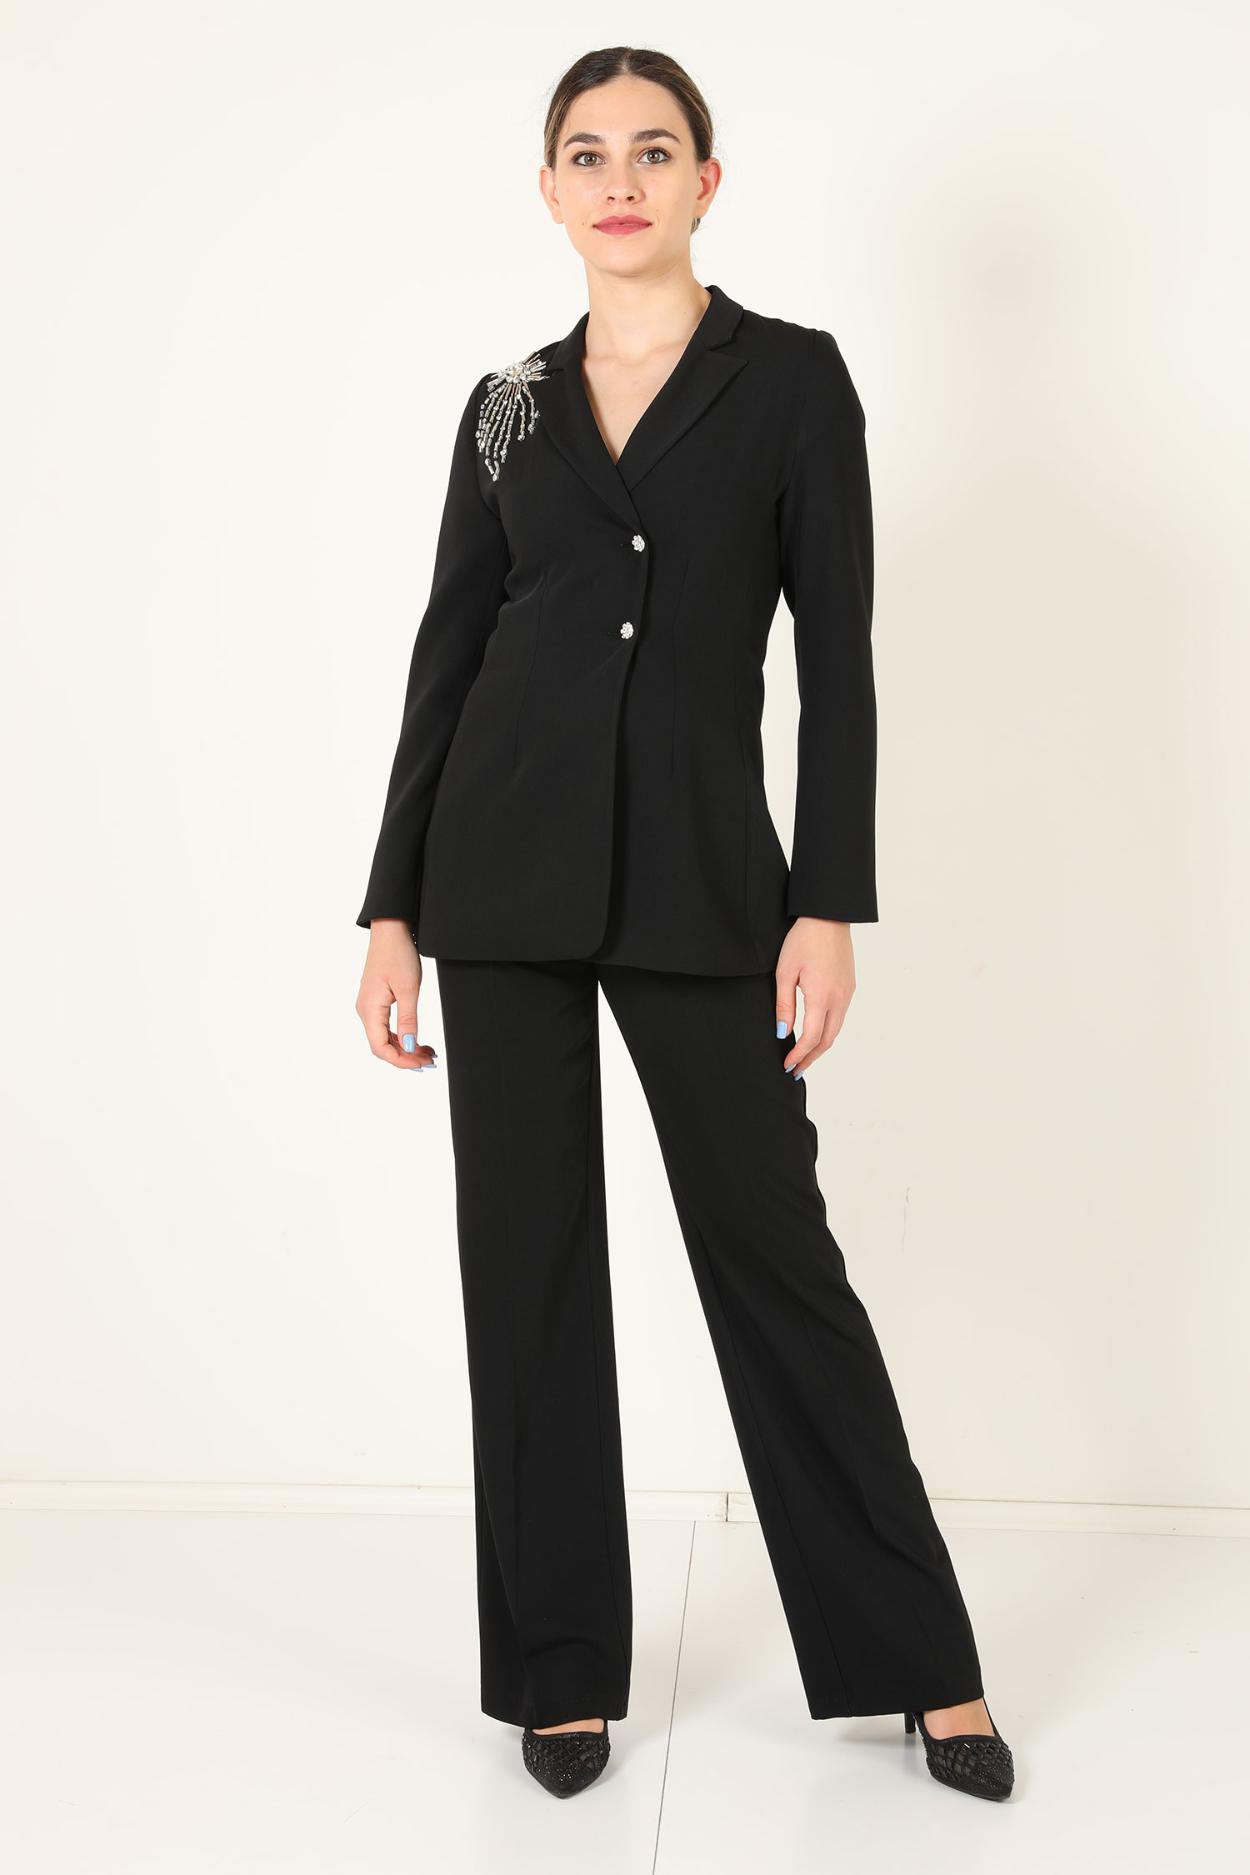 Men's British Style Slim Suit Coat Printing Night Casual Blazer Thin Jacket  7771 Asia S 47-51kg at Amazon Men's Clothing store